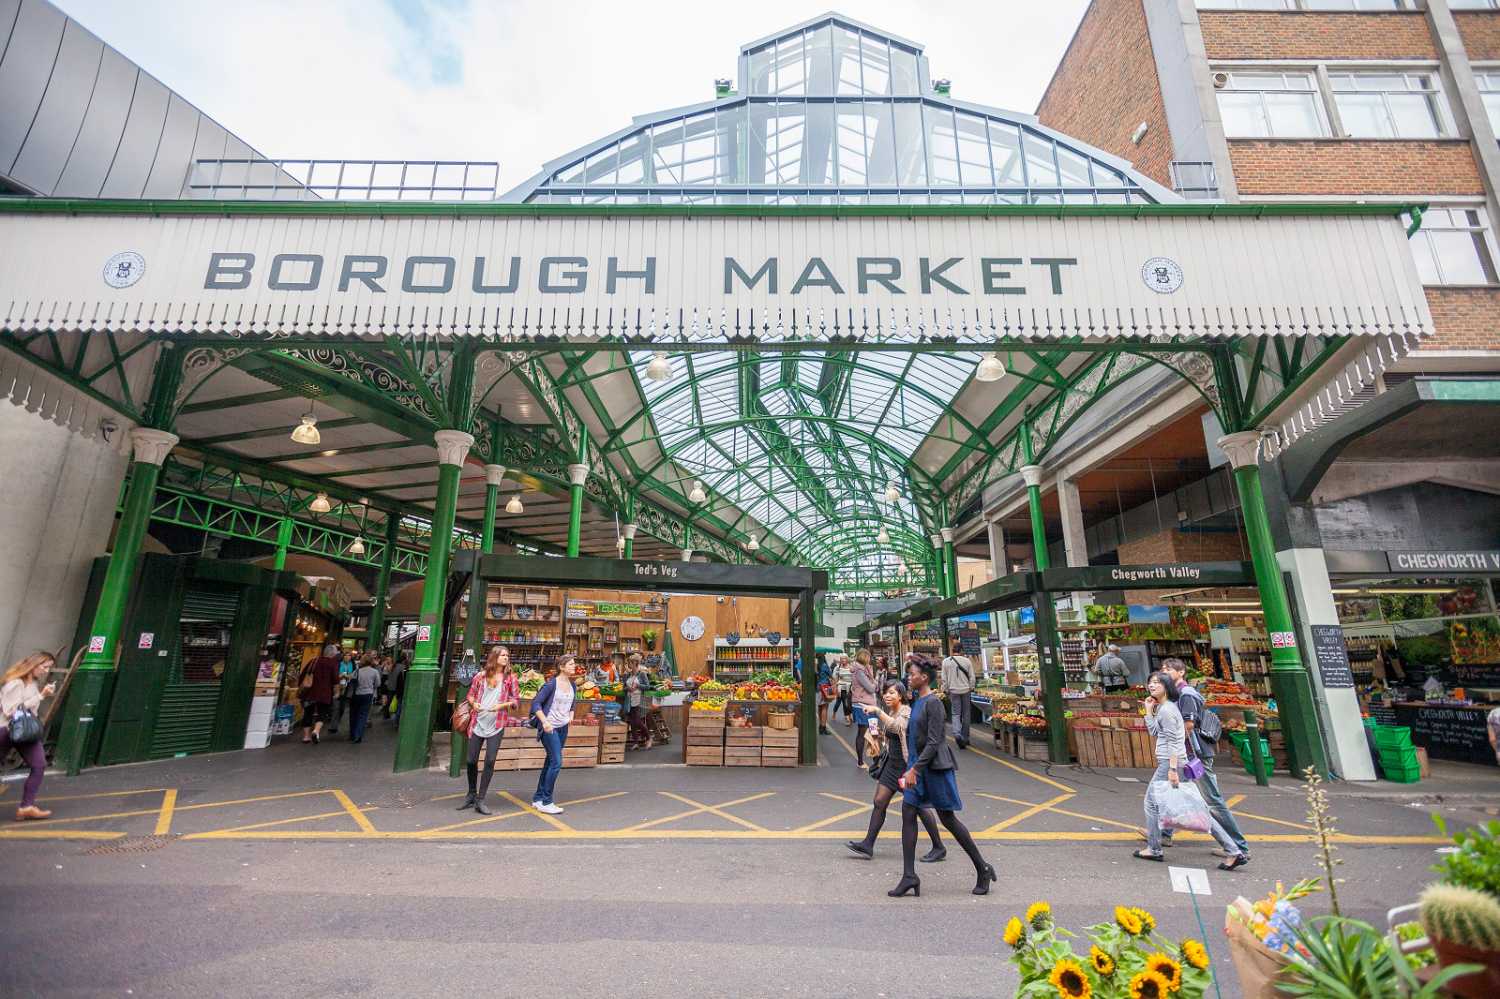 Borough Market - London’s oldest food market